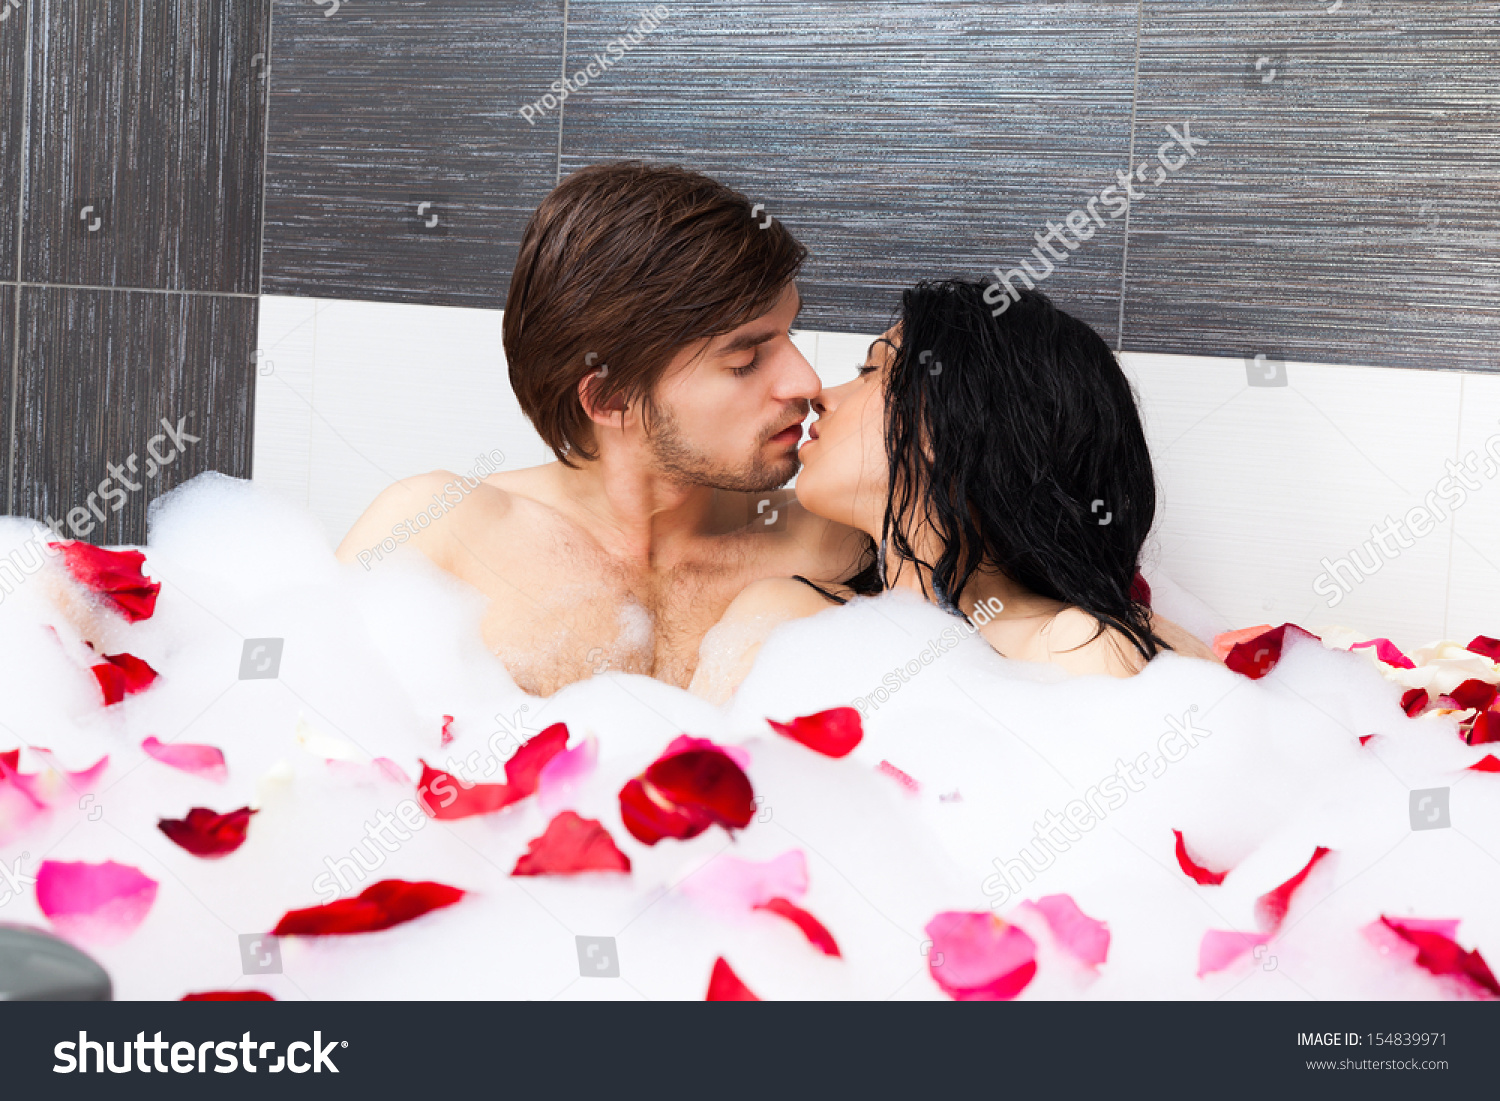 claudiu iancu add kissing in the bathtub photo